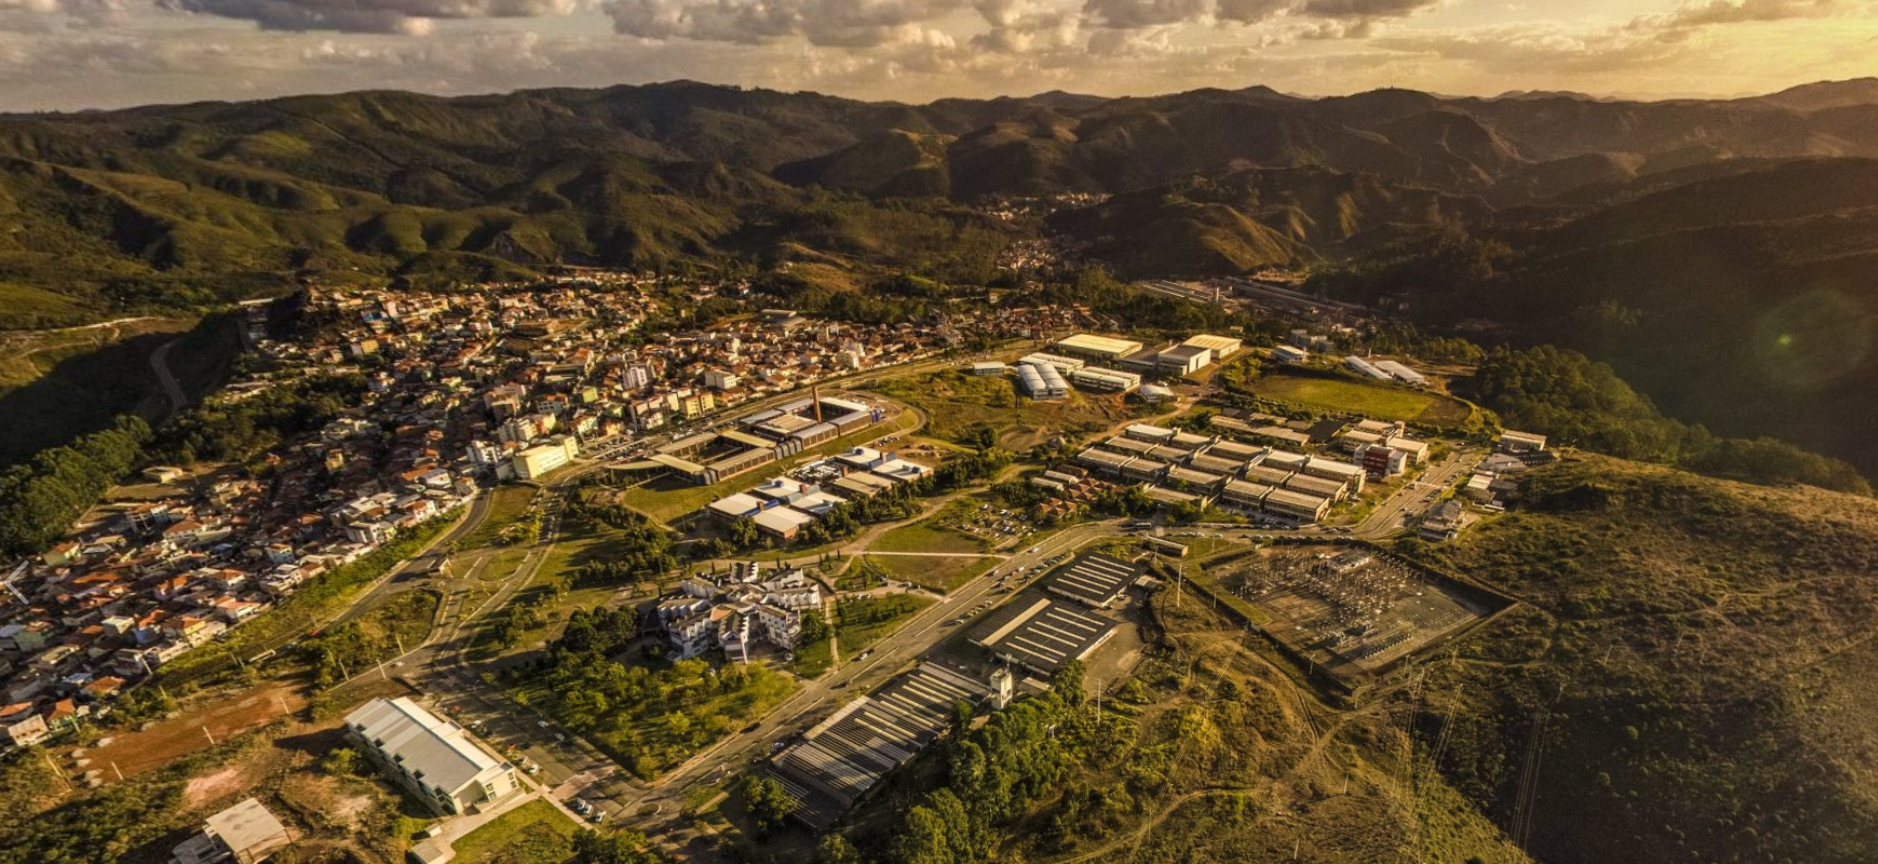 Campus Morro do Cruzeiro. Source: Usemobile